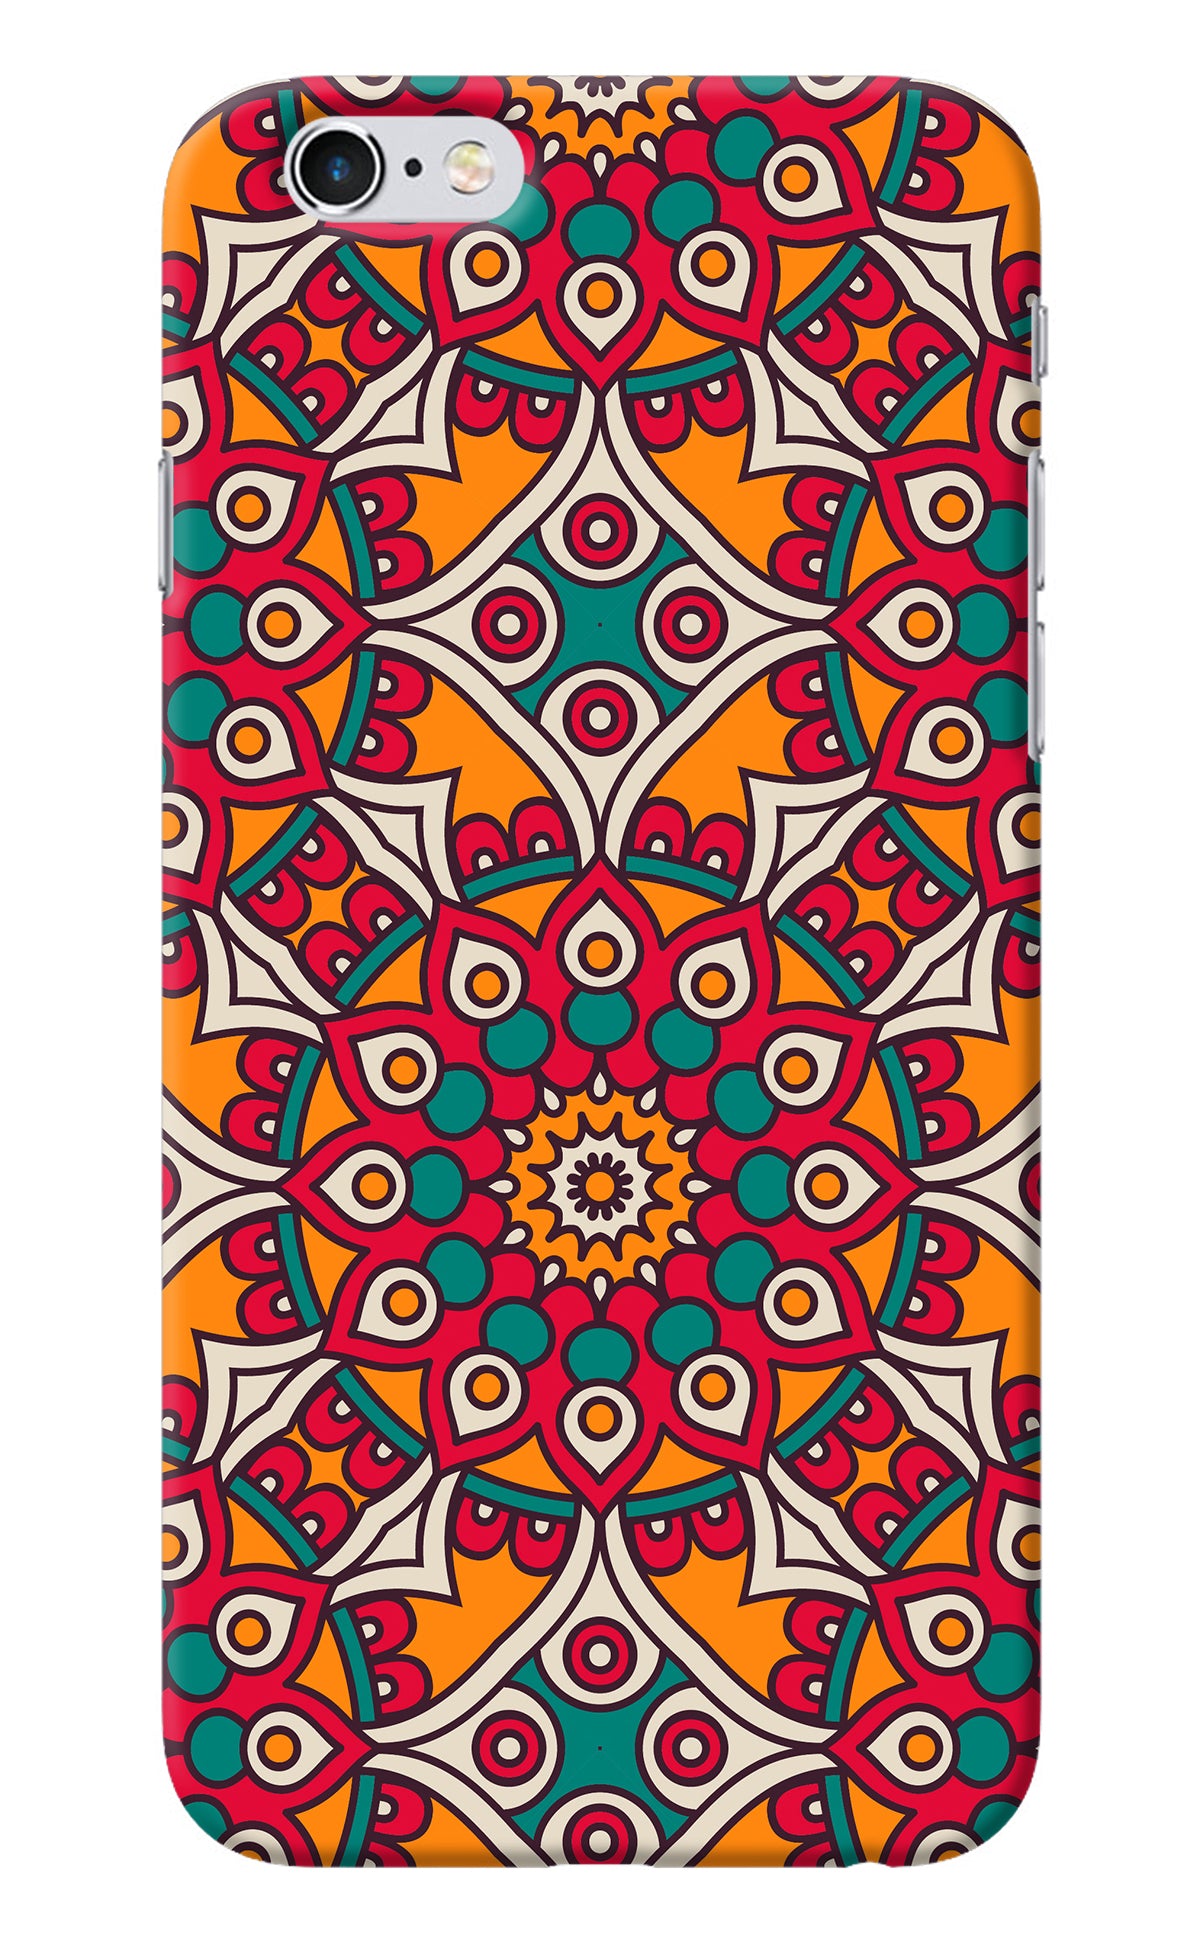 Mandala Art iPhone 6/6s Back Cover